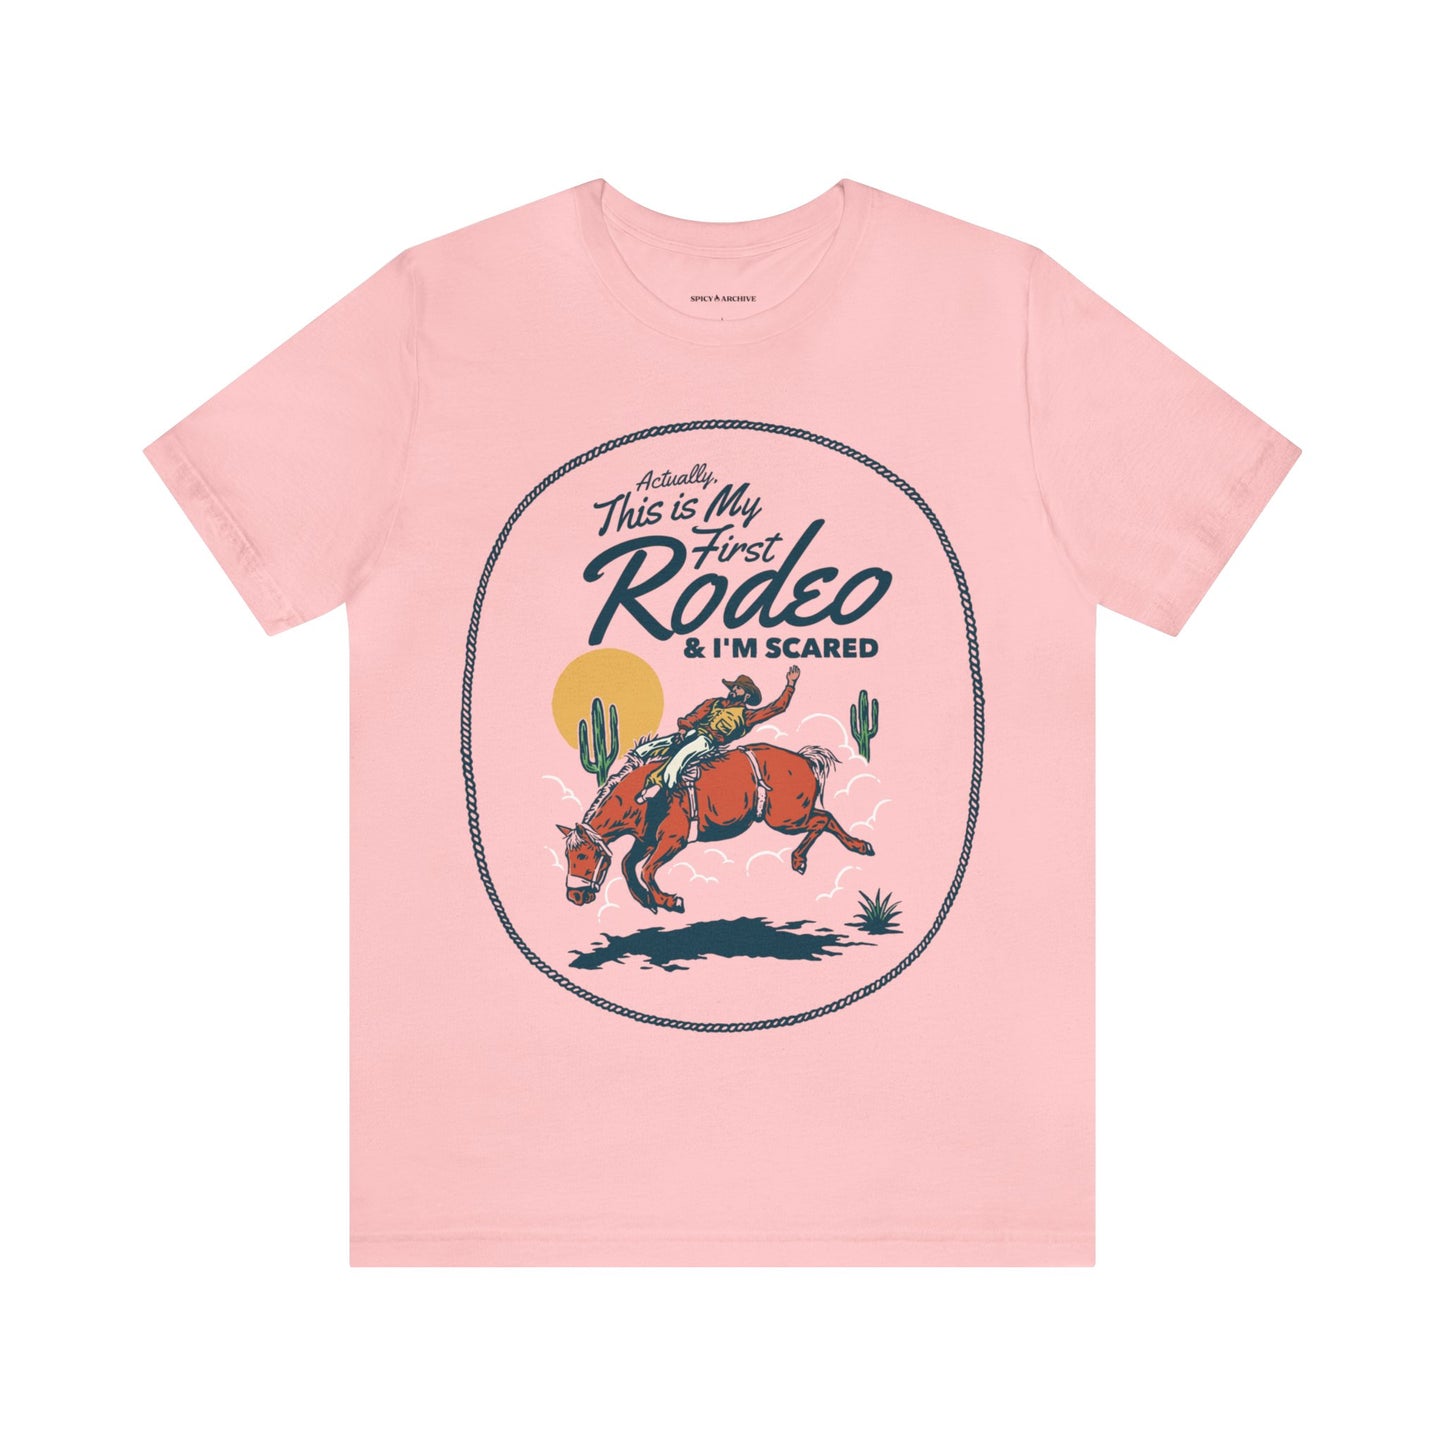 First Rodeo | Unisex Cotton T-Shirt